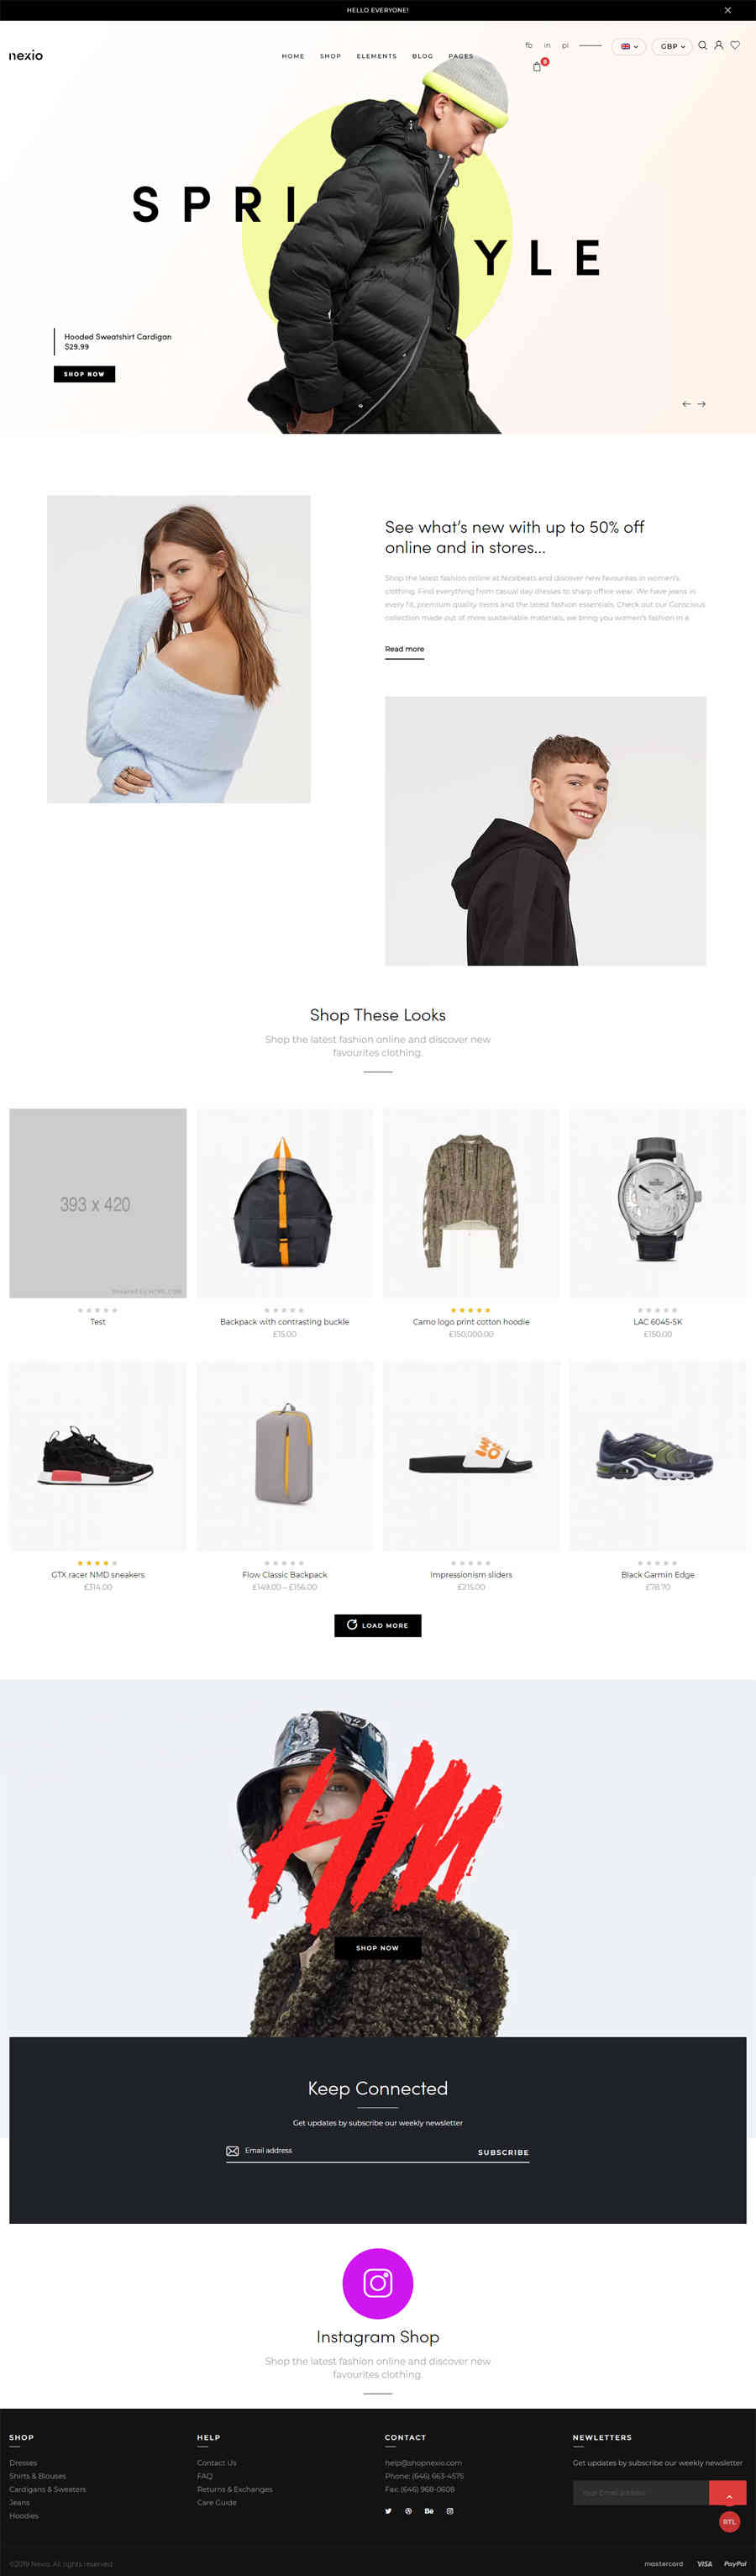 thiet ke website tmi fashion shop 4054